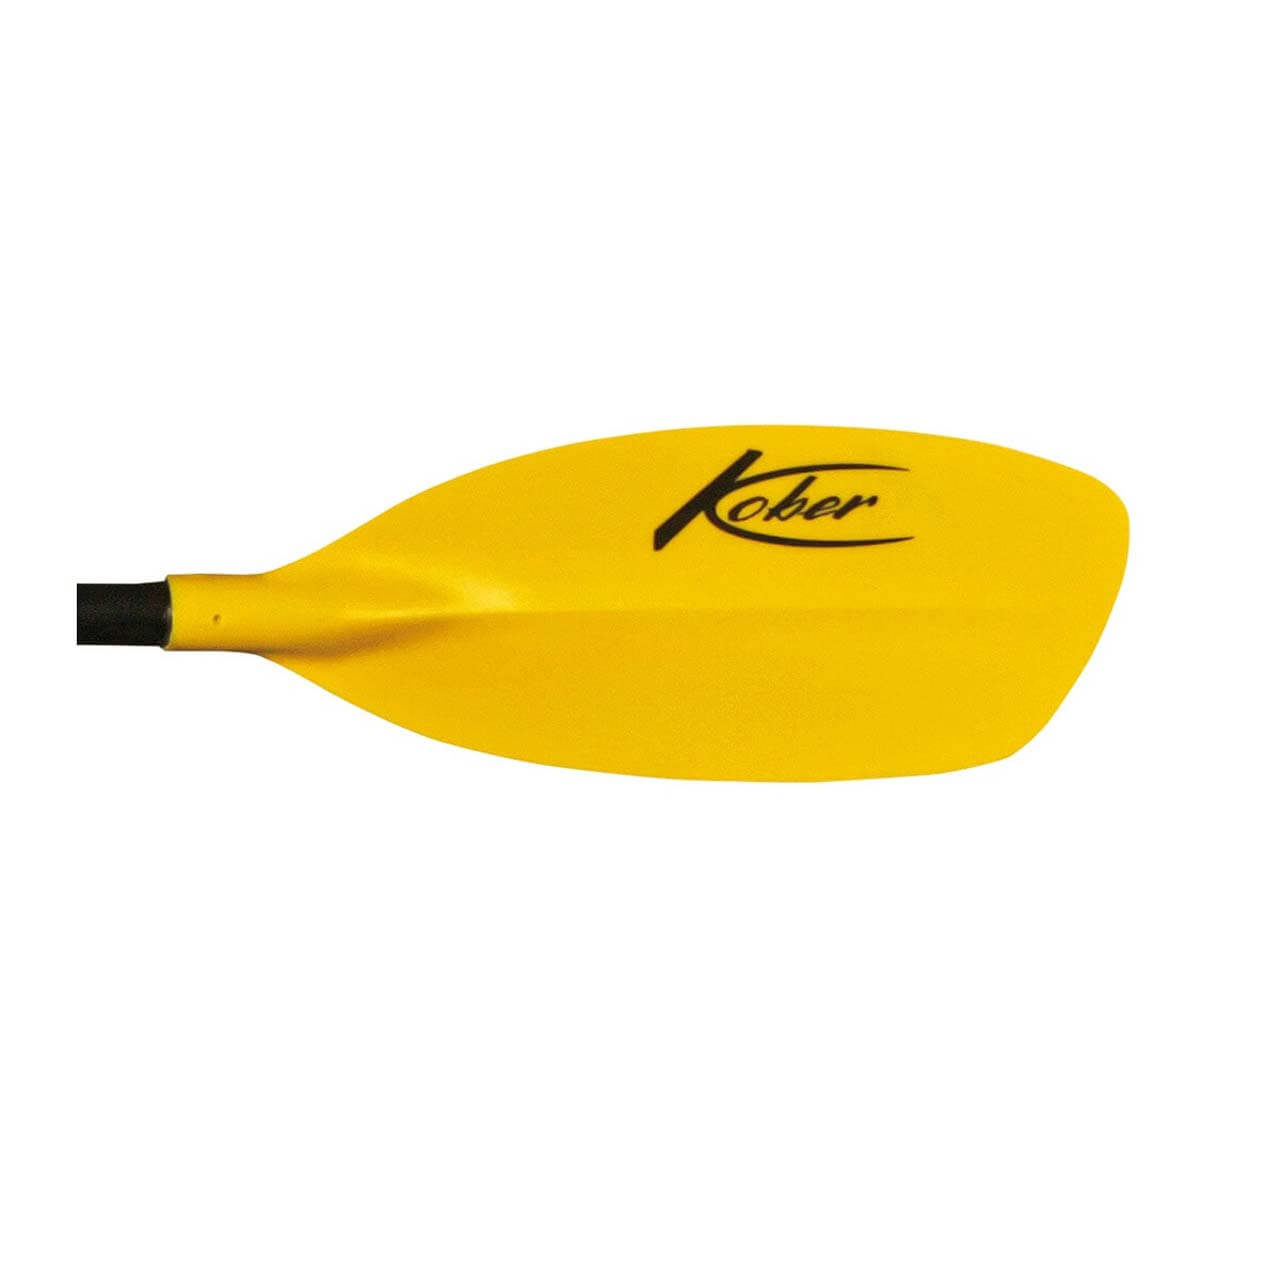 Kober Speedy Kinderpaddel GFK Schaft - gelb, 190cm